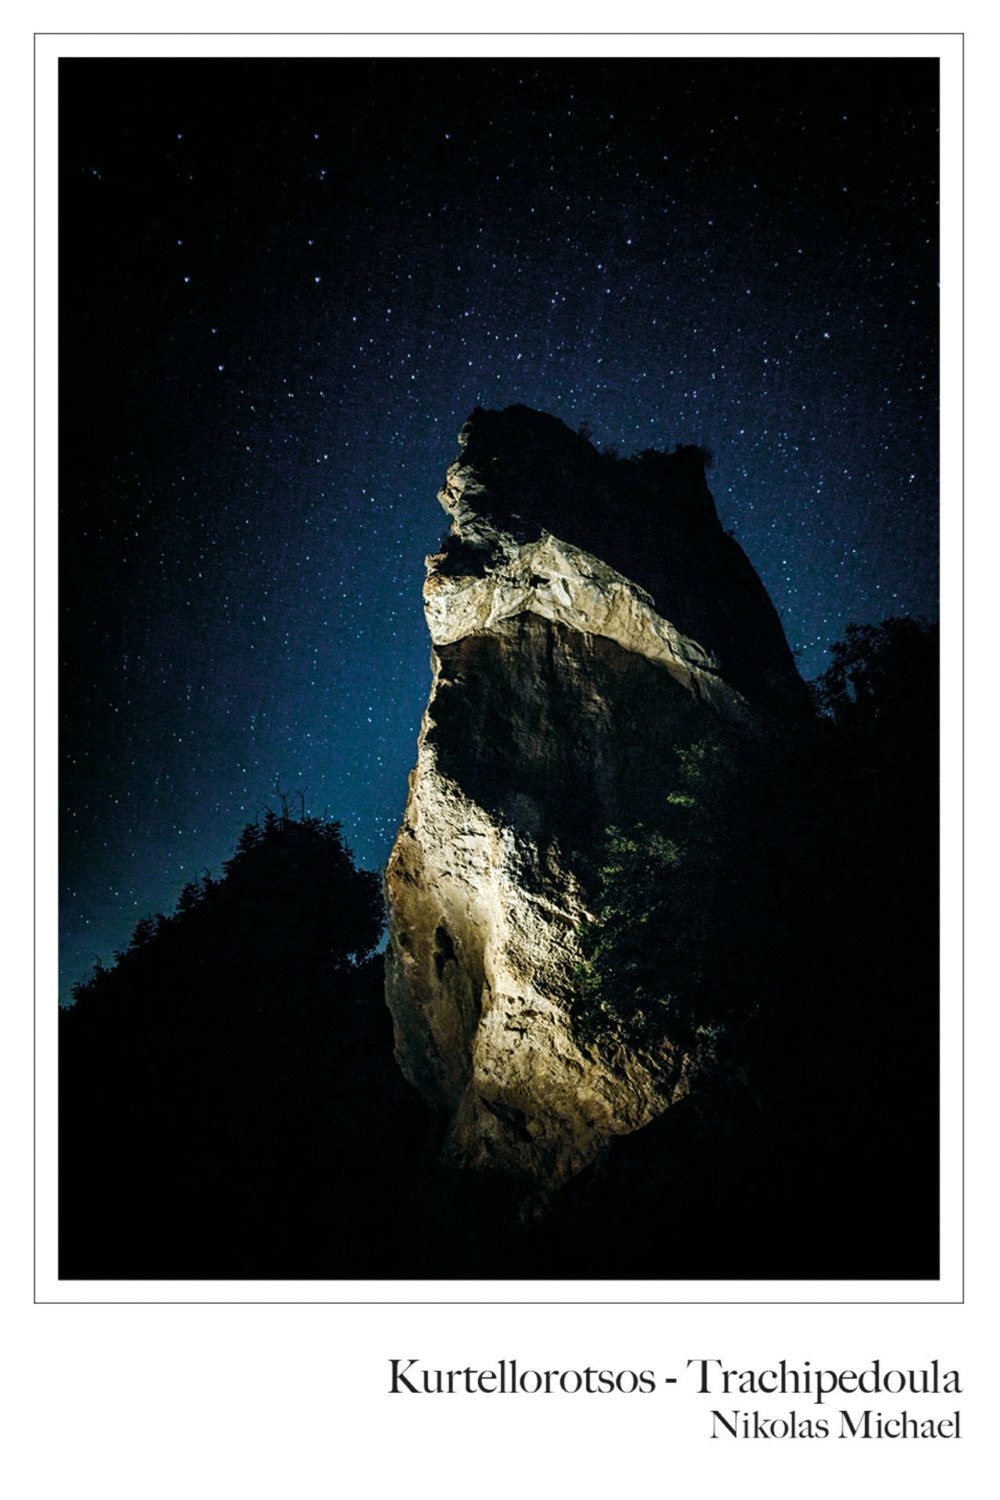 Kurtellorotsos - Trachipedoula by Nikolas Michael (night photography, rock, stars, fine art, Cyprus, mountains, Mediterranean)